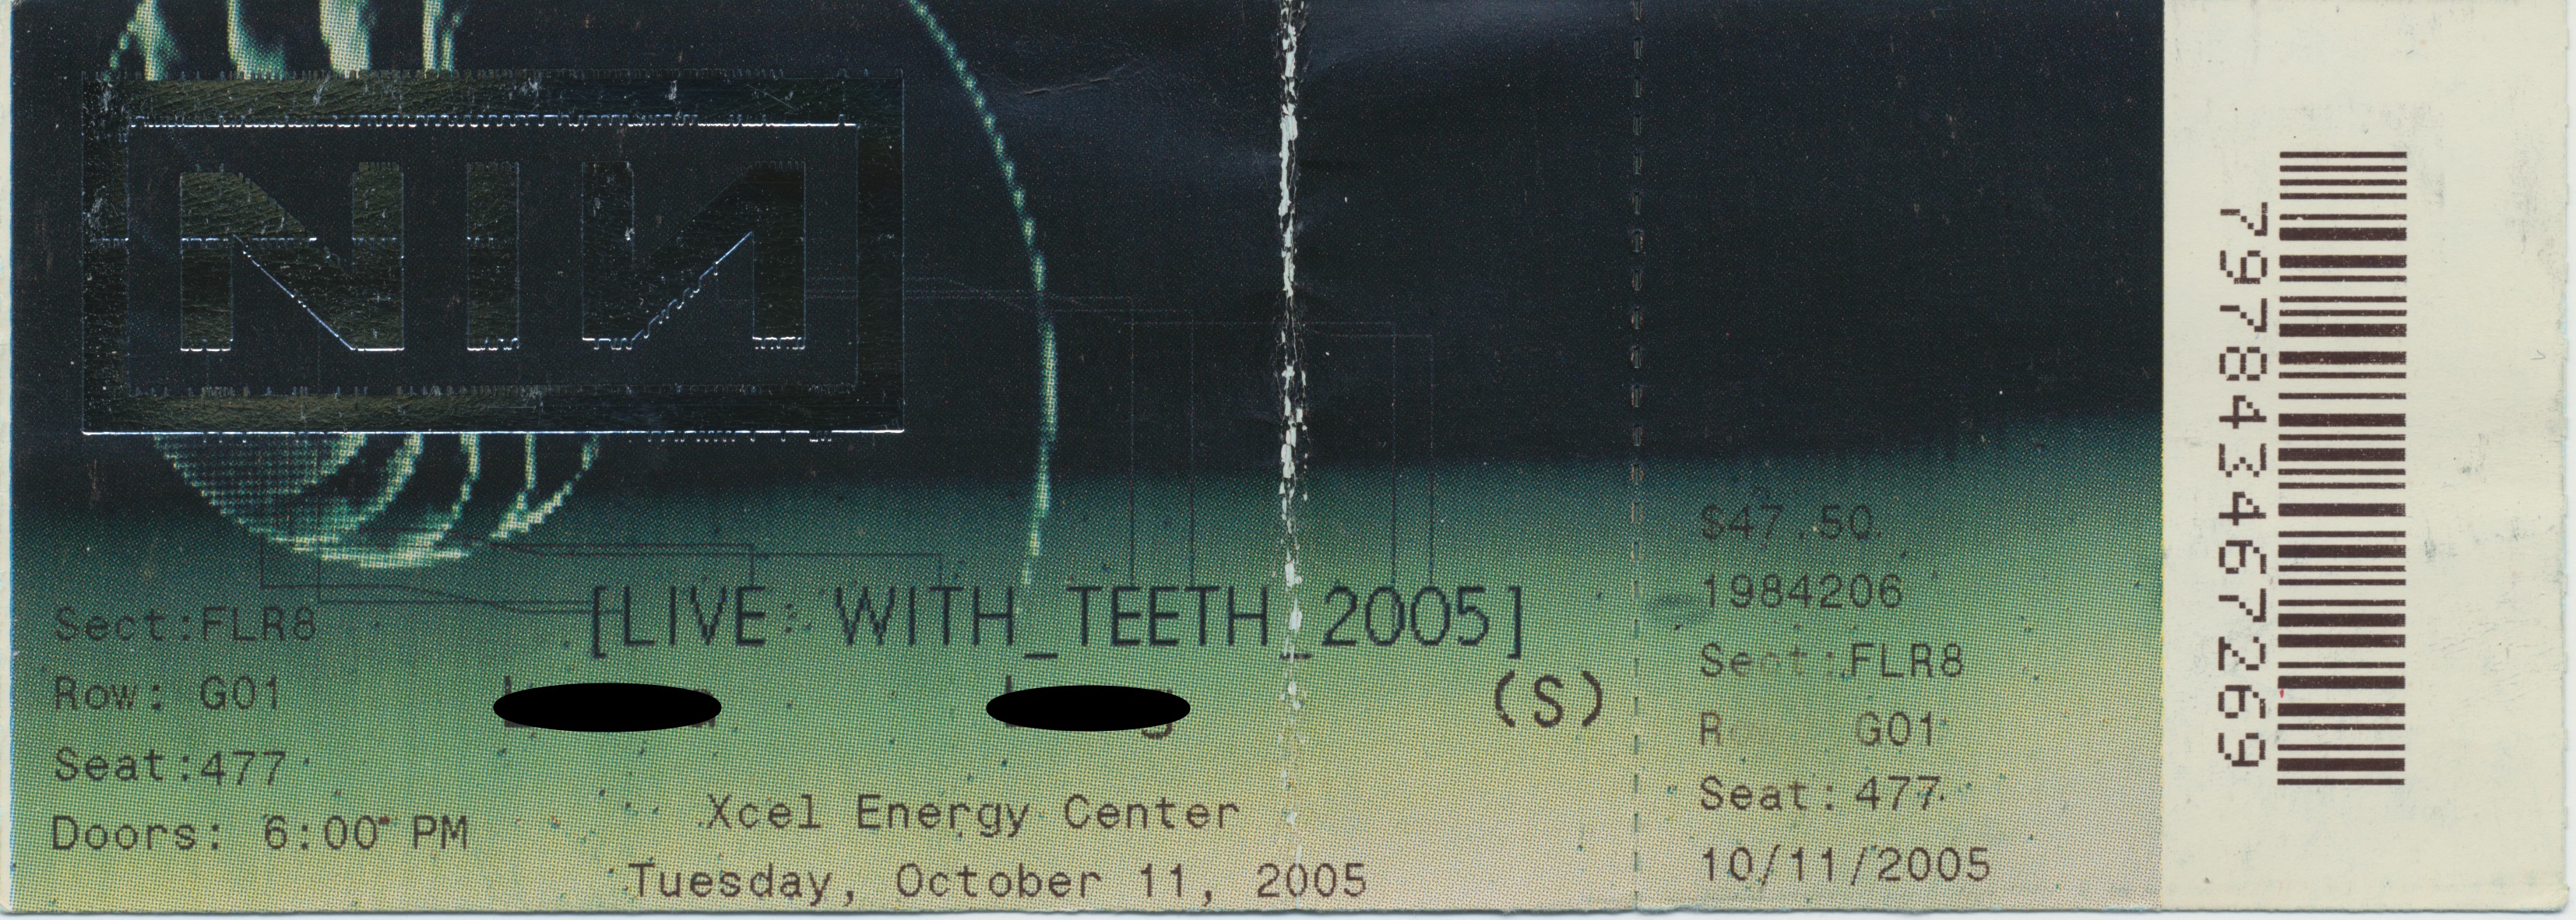 2005/10/11 Ticket